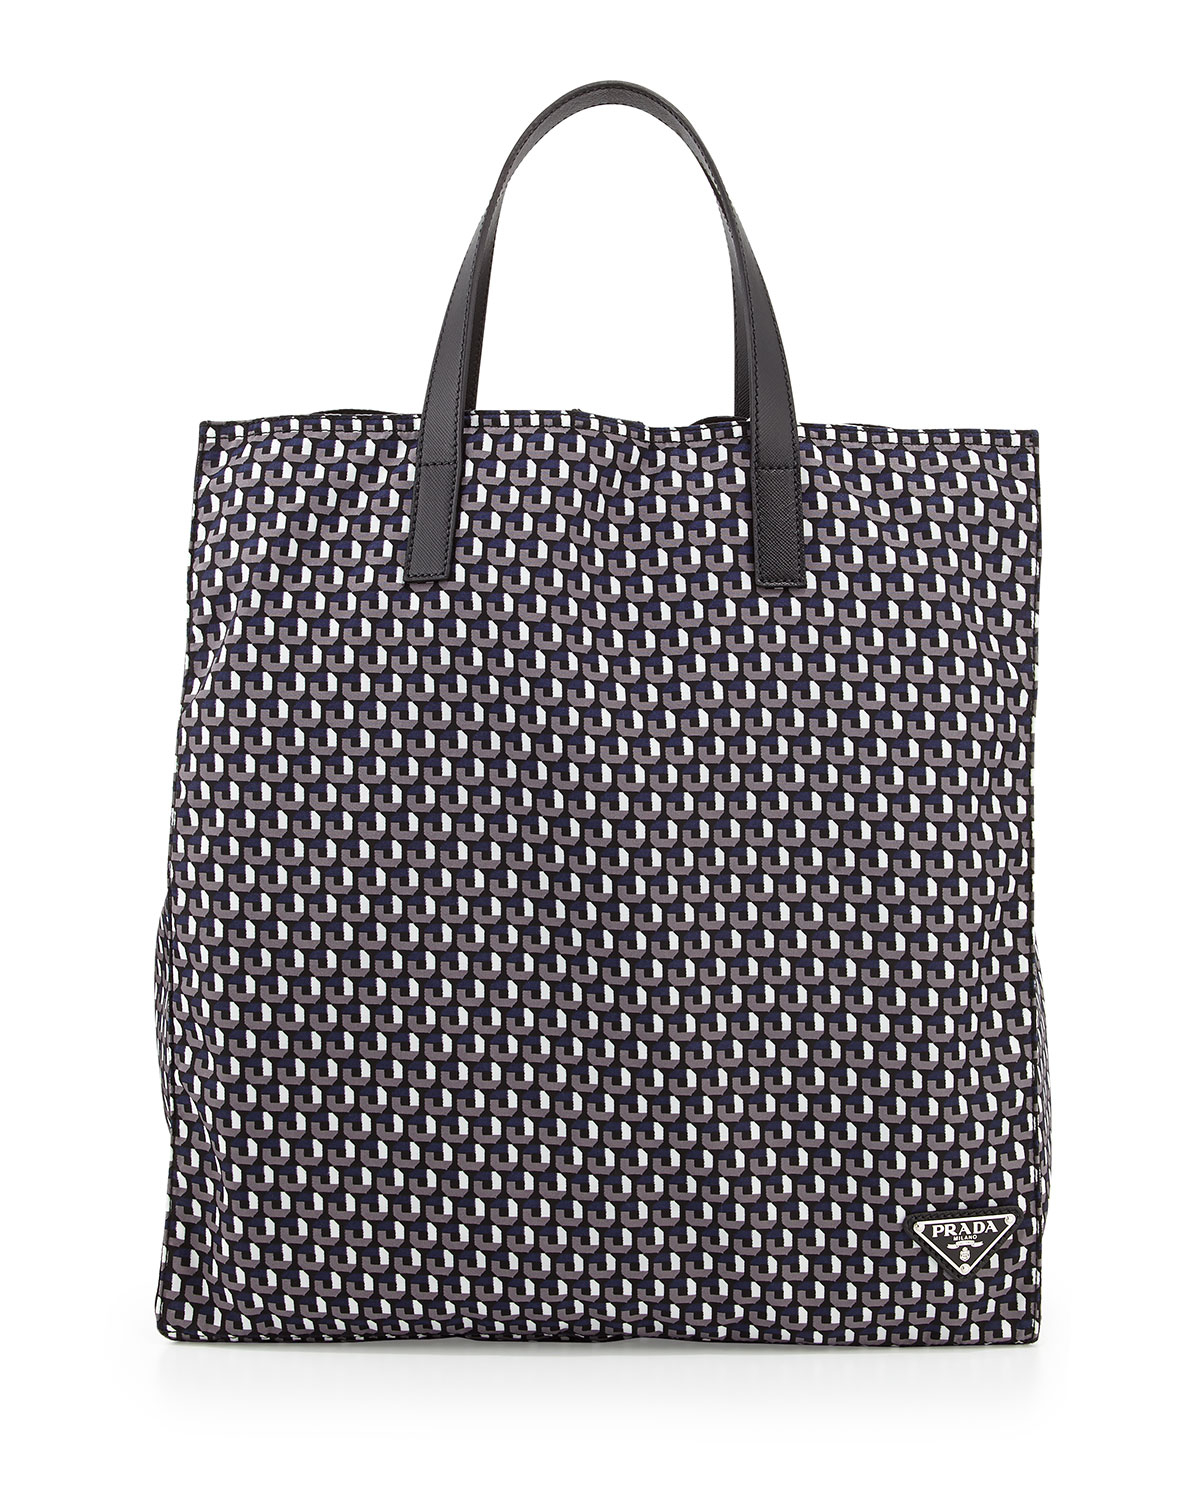 Lyst - Prada Men's Octagon-print Nylon Tote Bag